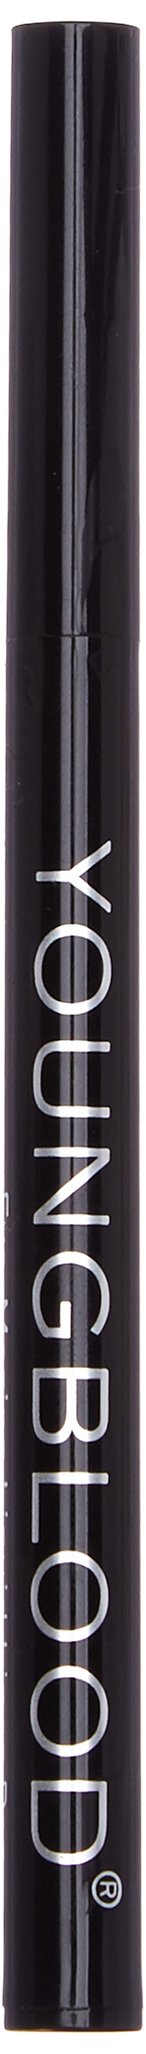 Youngblood Mineral Cosmetics Natural Eye-Mazing Liquid Liner Pen - Noir - 0.59 ml / 0.02 fl. oz.